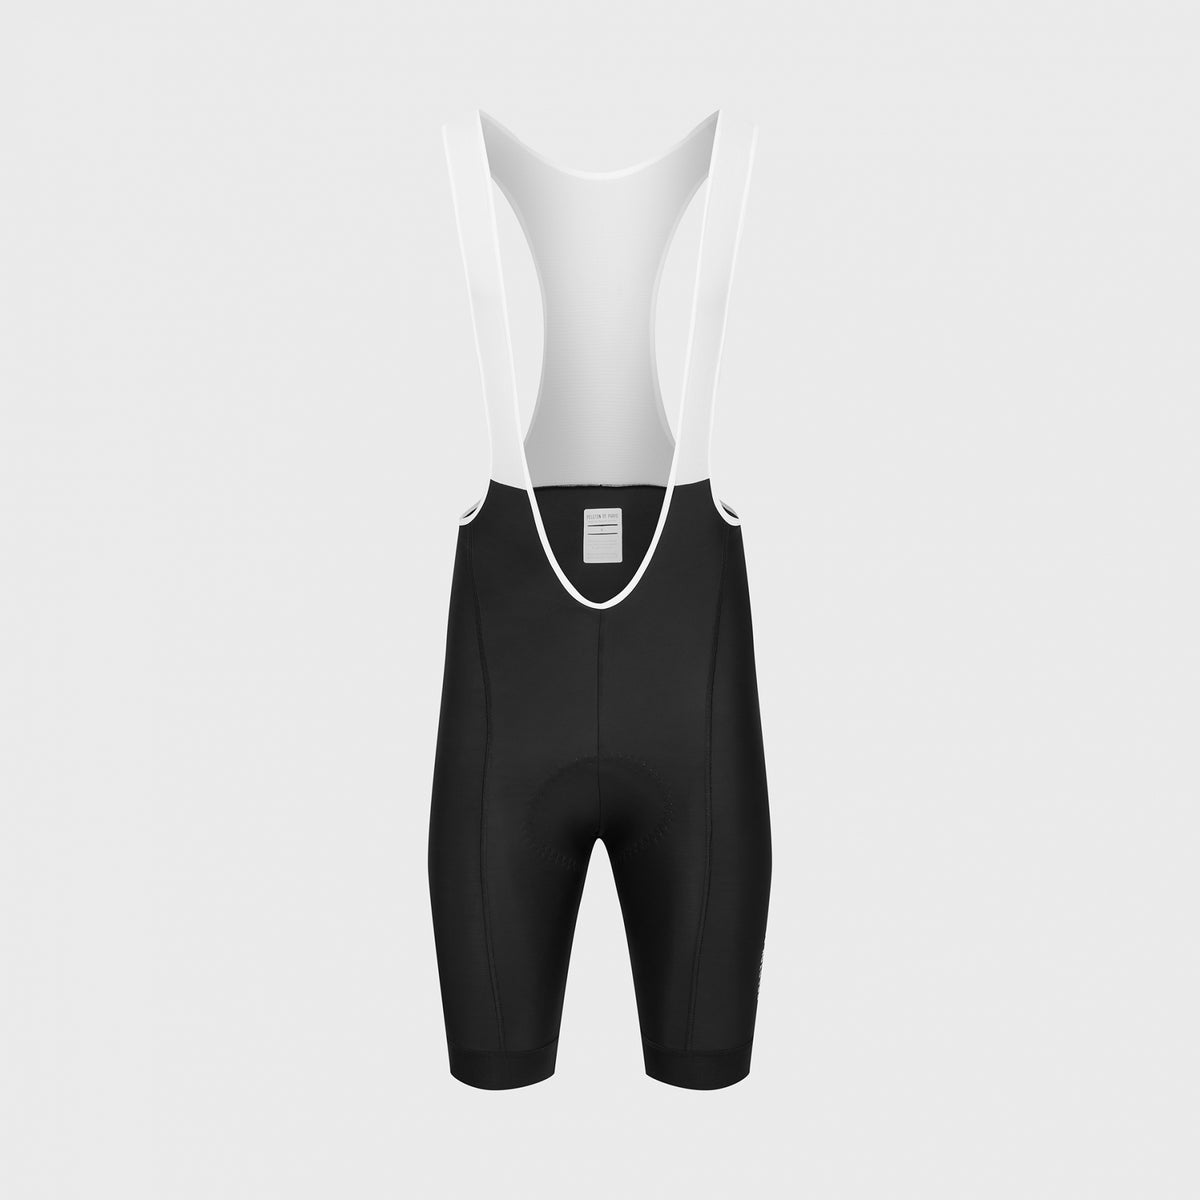 Domestique Bib Shorts 2.0 | Black